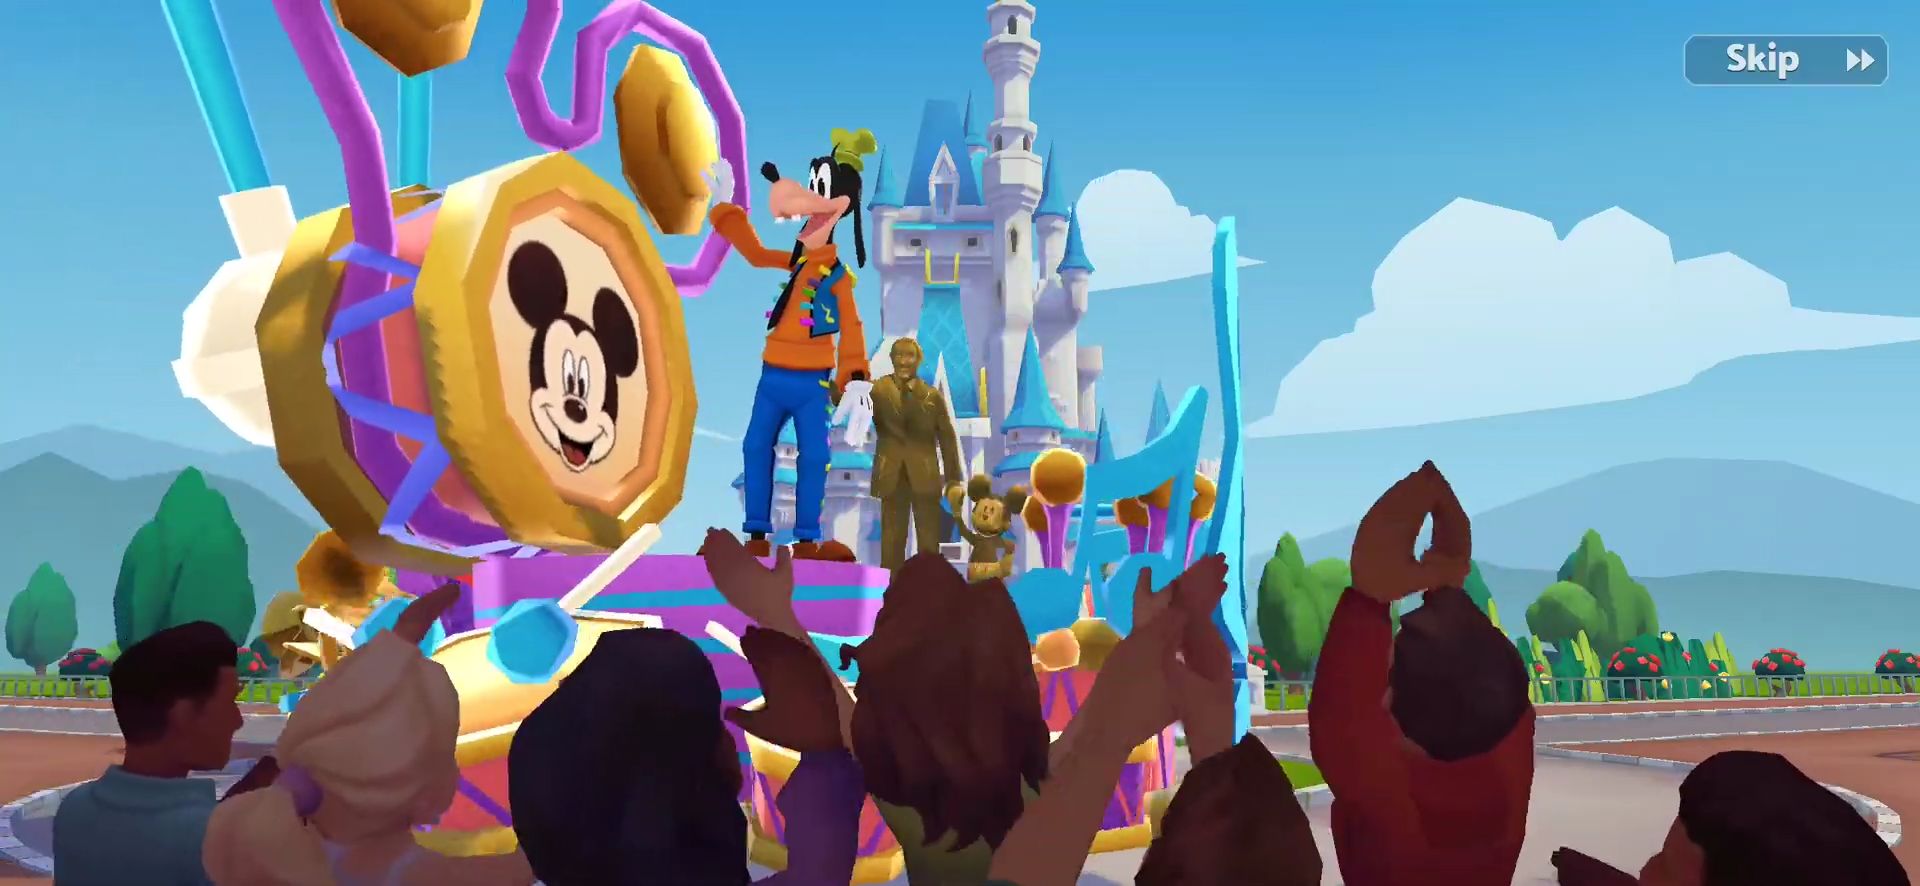 Descargar Disney Wonderful Worlds gratis para Android.